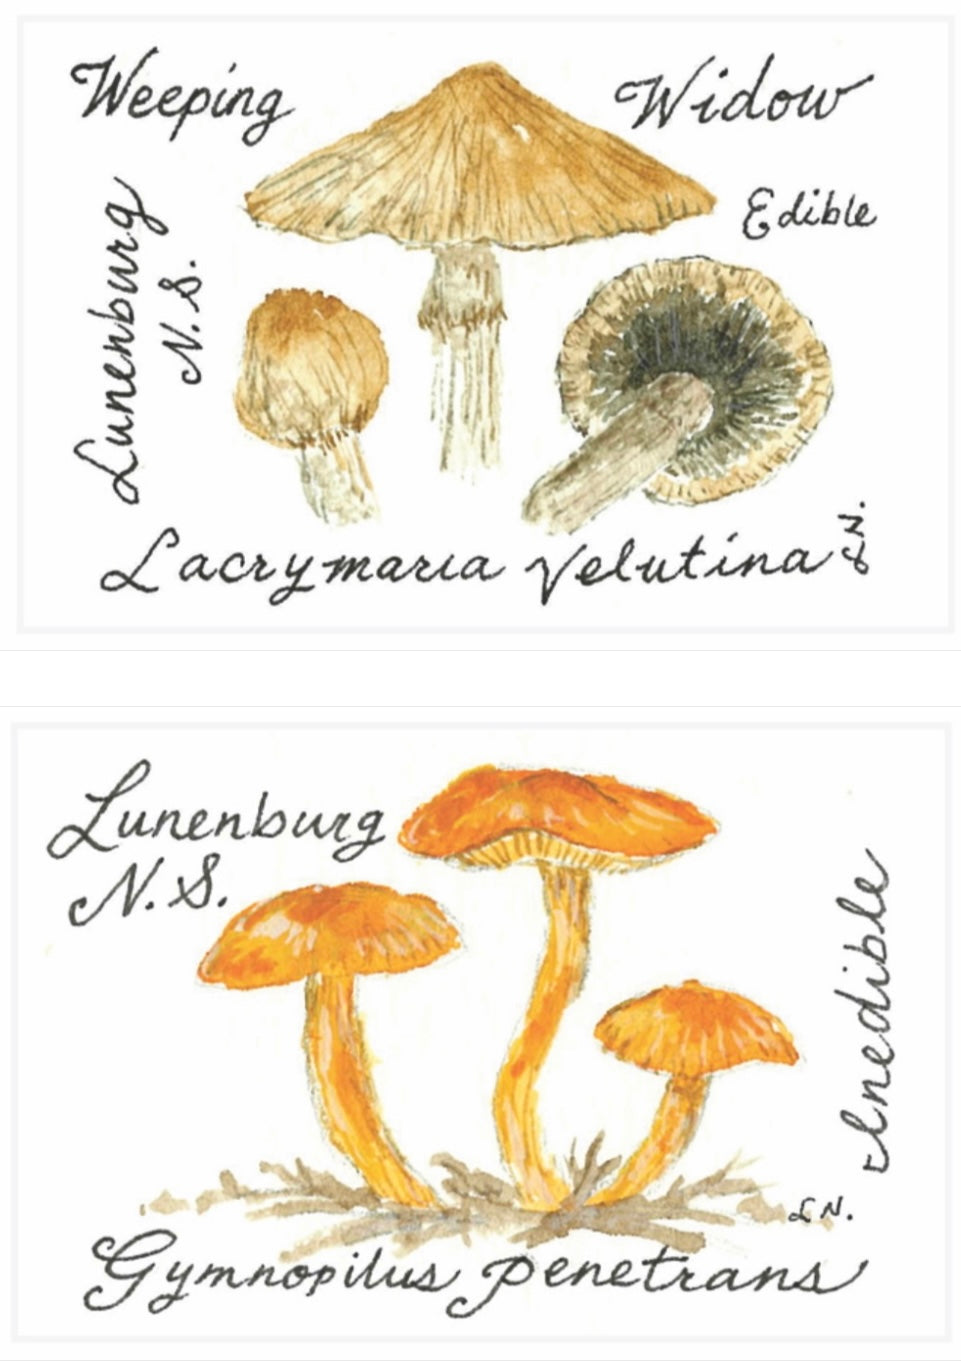 Mushroom Matchboxes